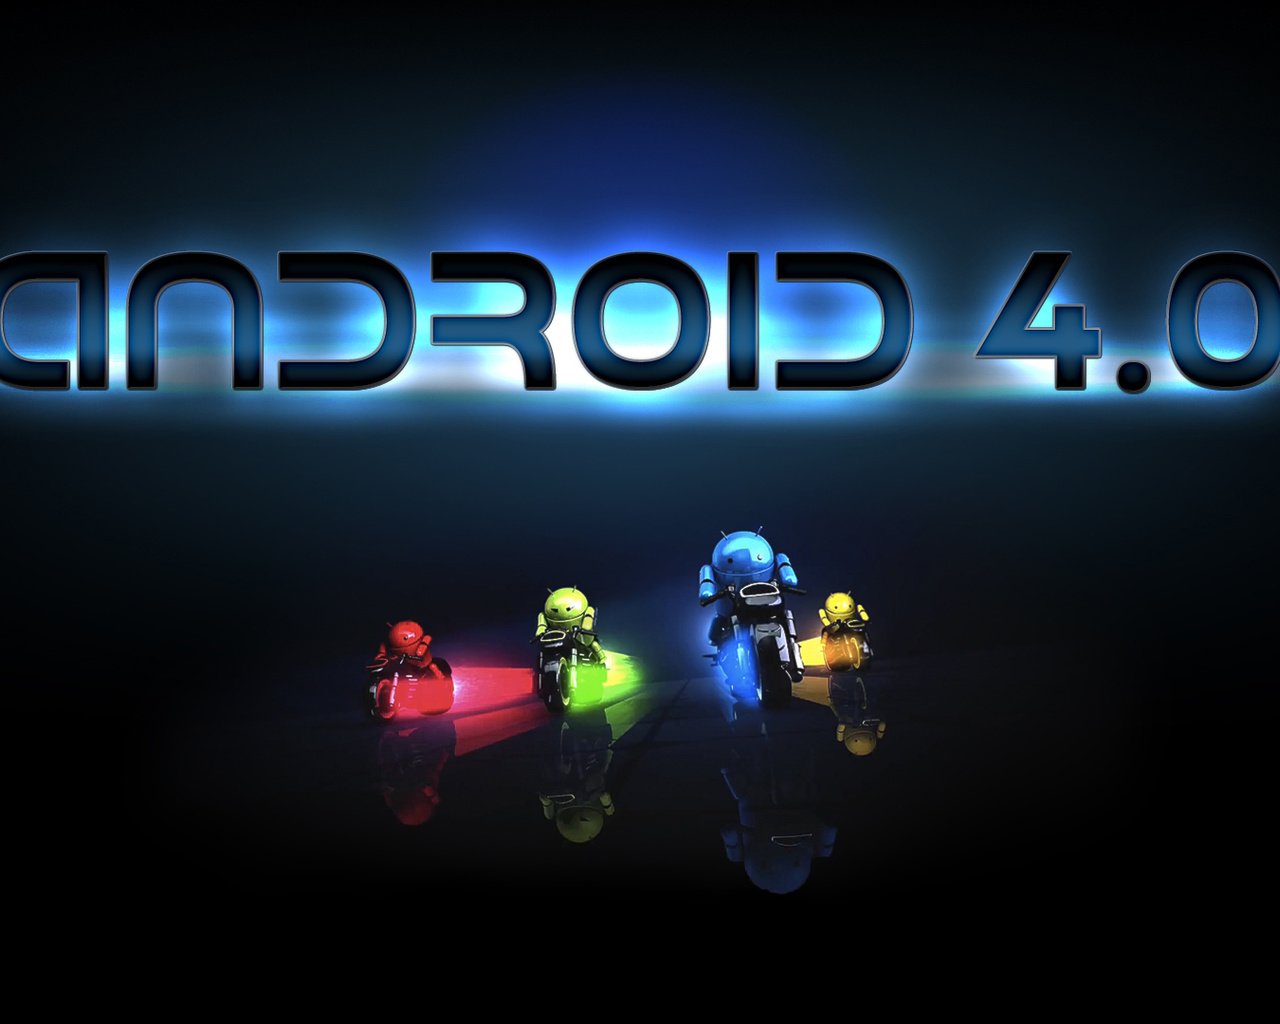 Обои андроид, жёлтая, голубая, краcный, android 4.0, грин, android, yellow, blue, red, green разрешение 1920x1080 Загрузить